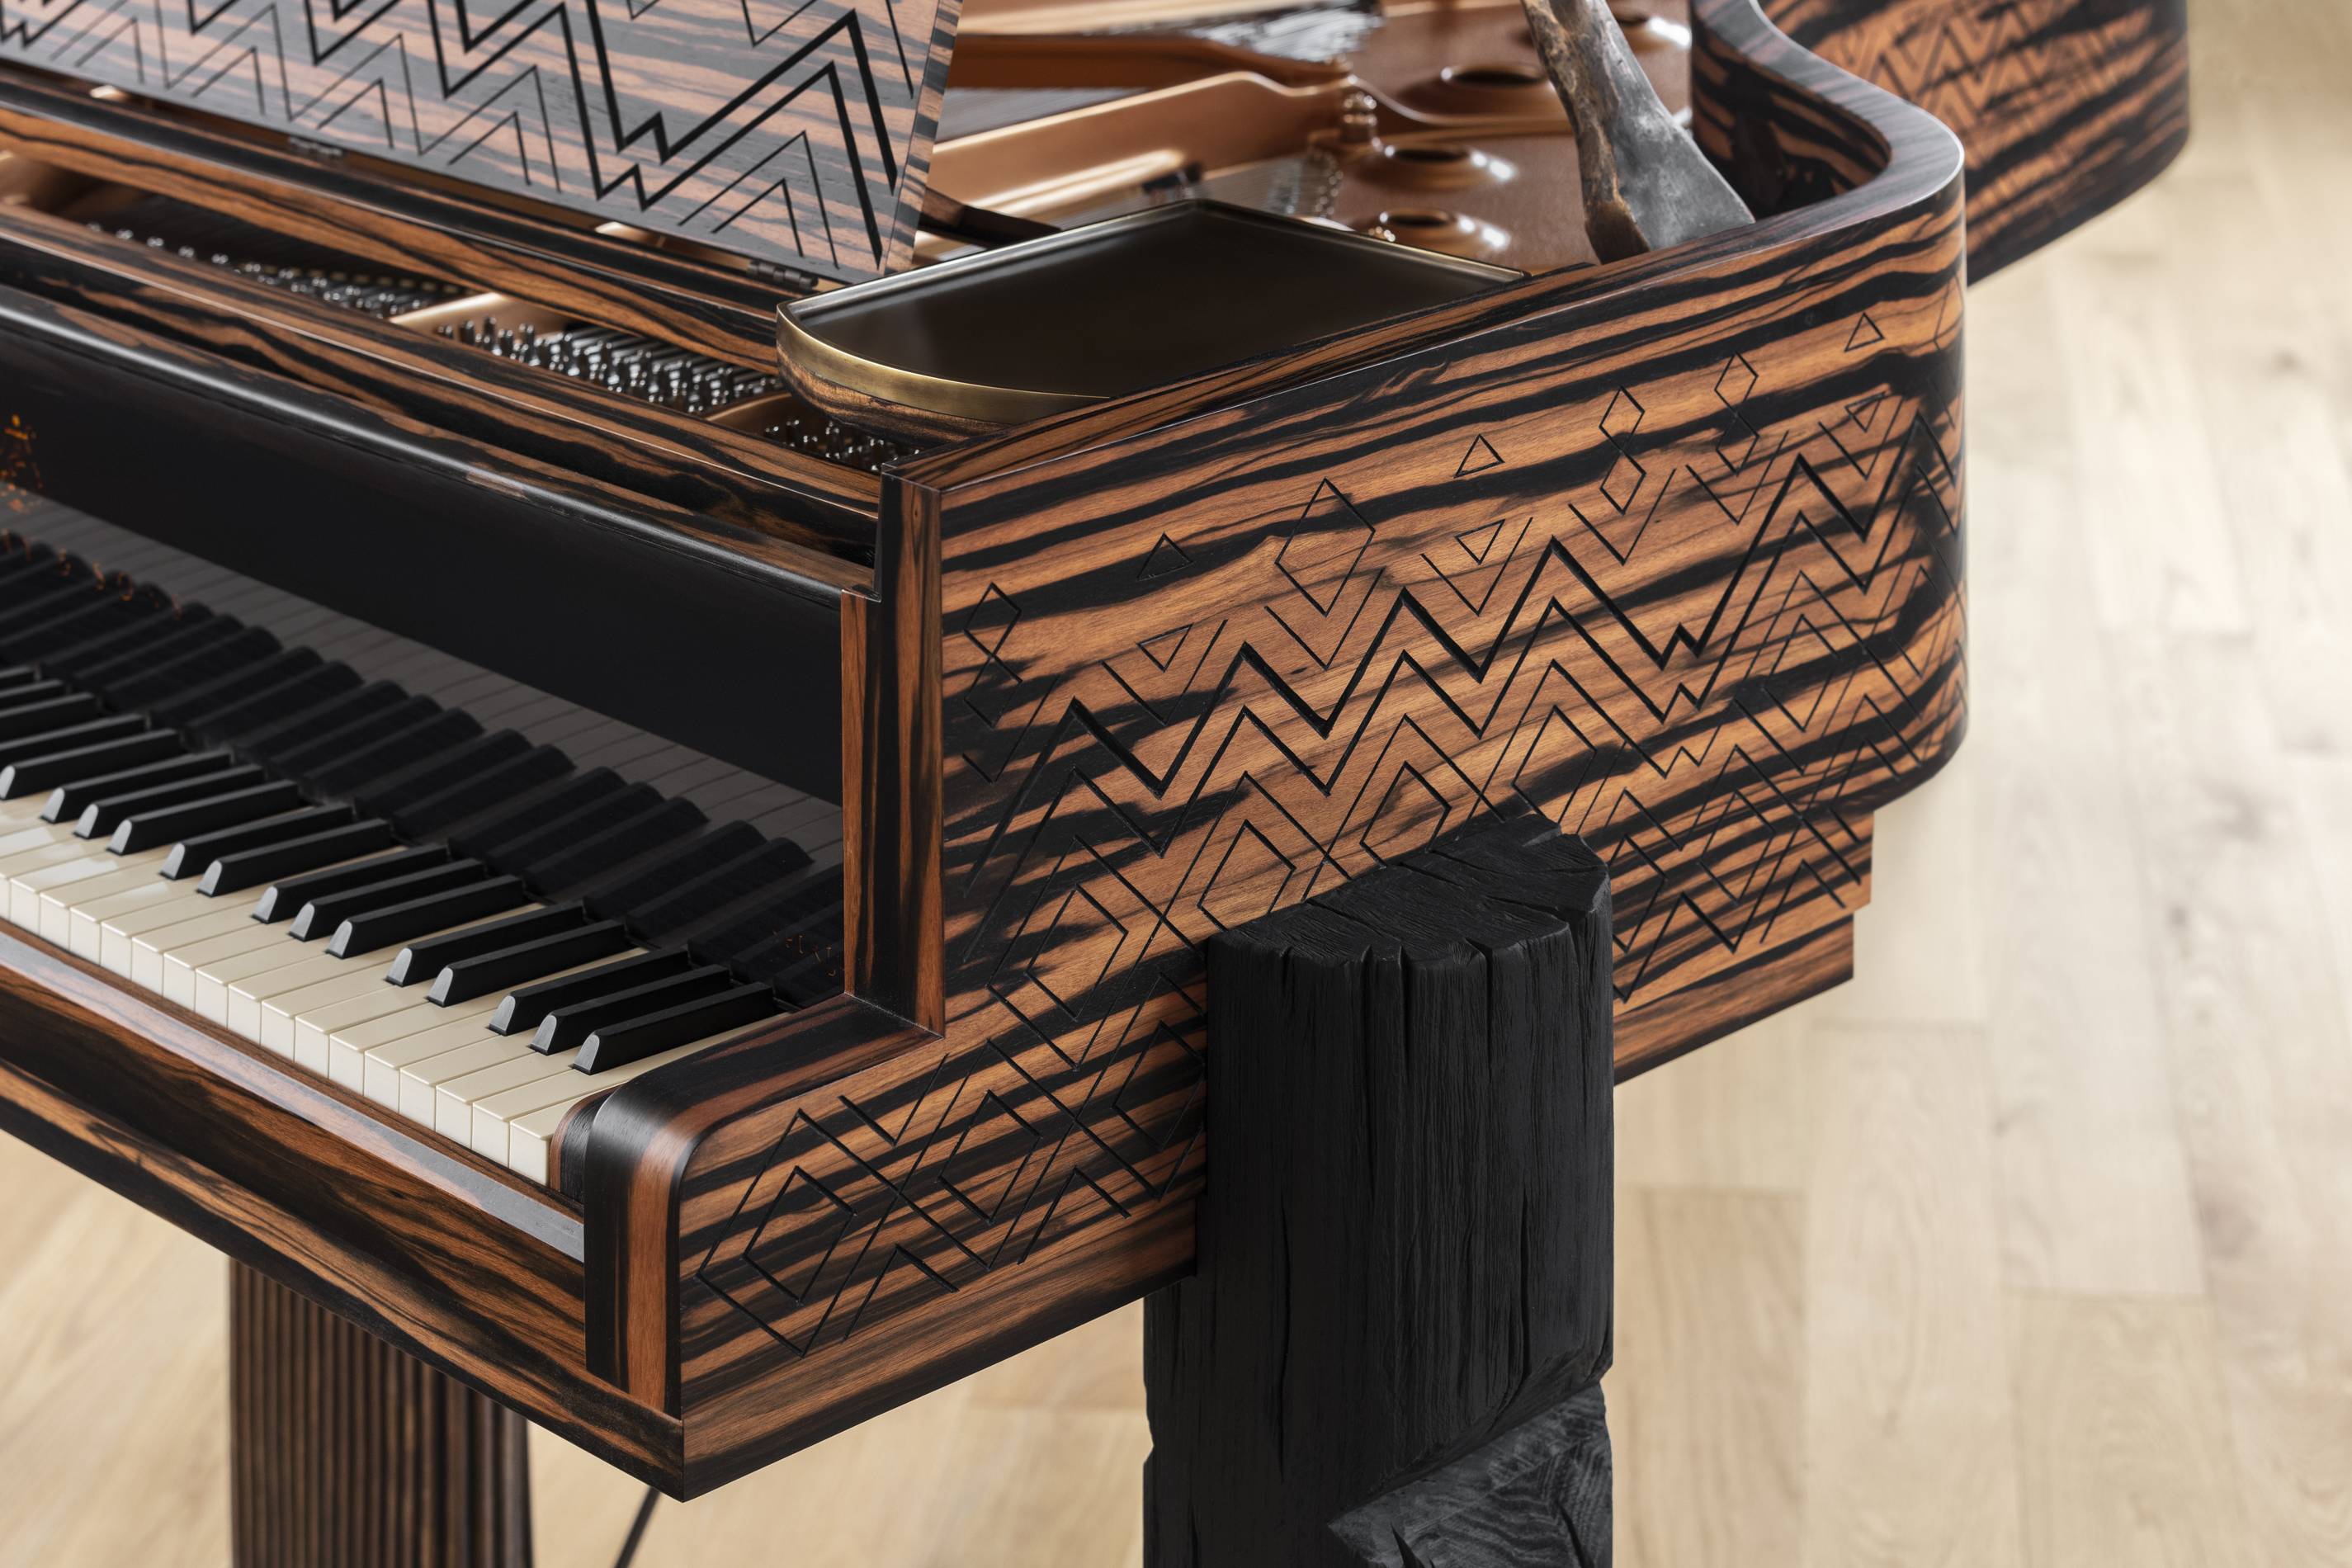 Lenny Kravit's Steinway Piano collaboration